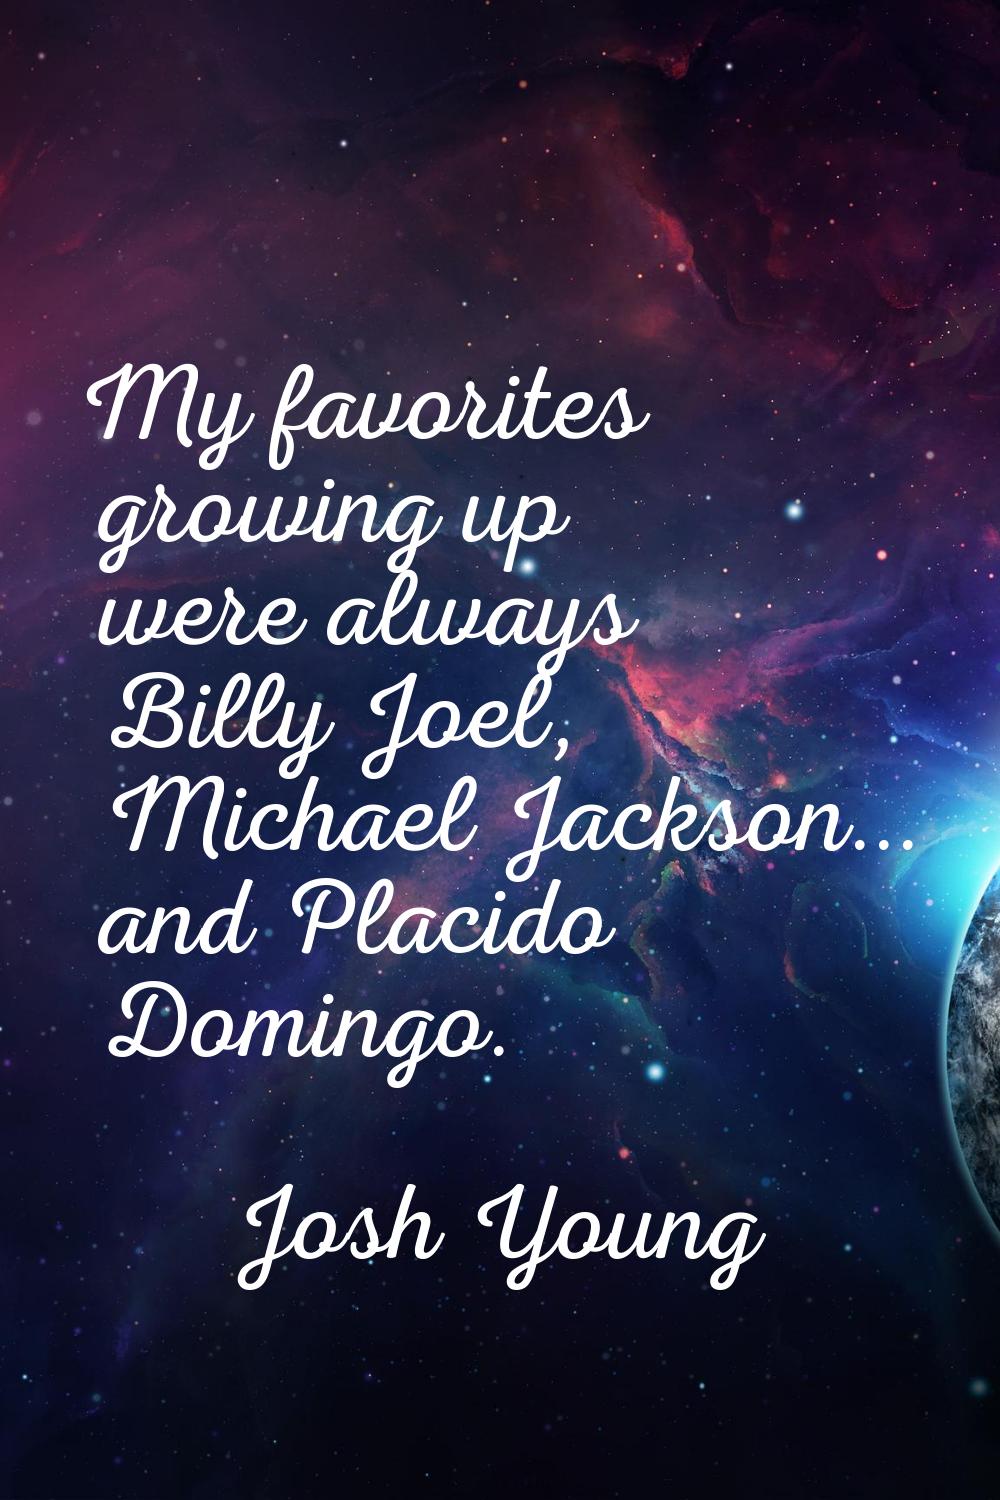 My favorites growing up were always Billy Joel, Michael Jackson... and Placido Domingo.